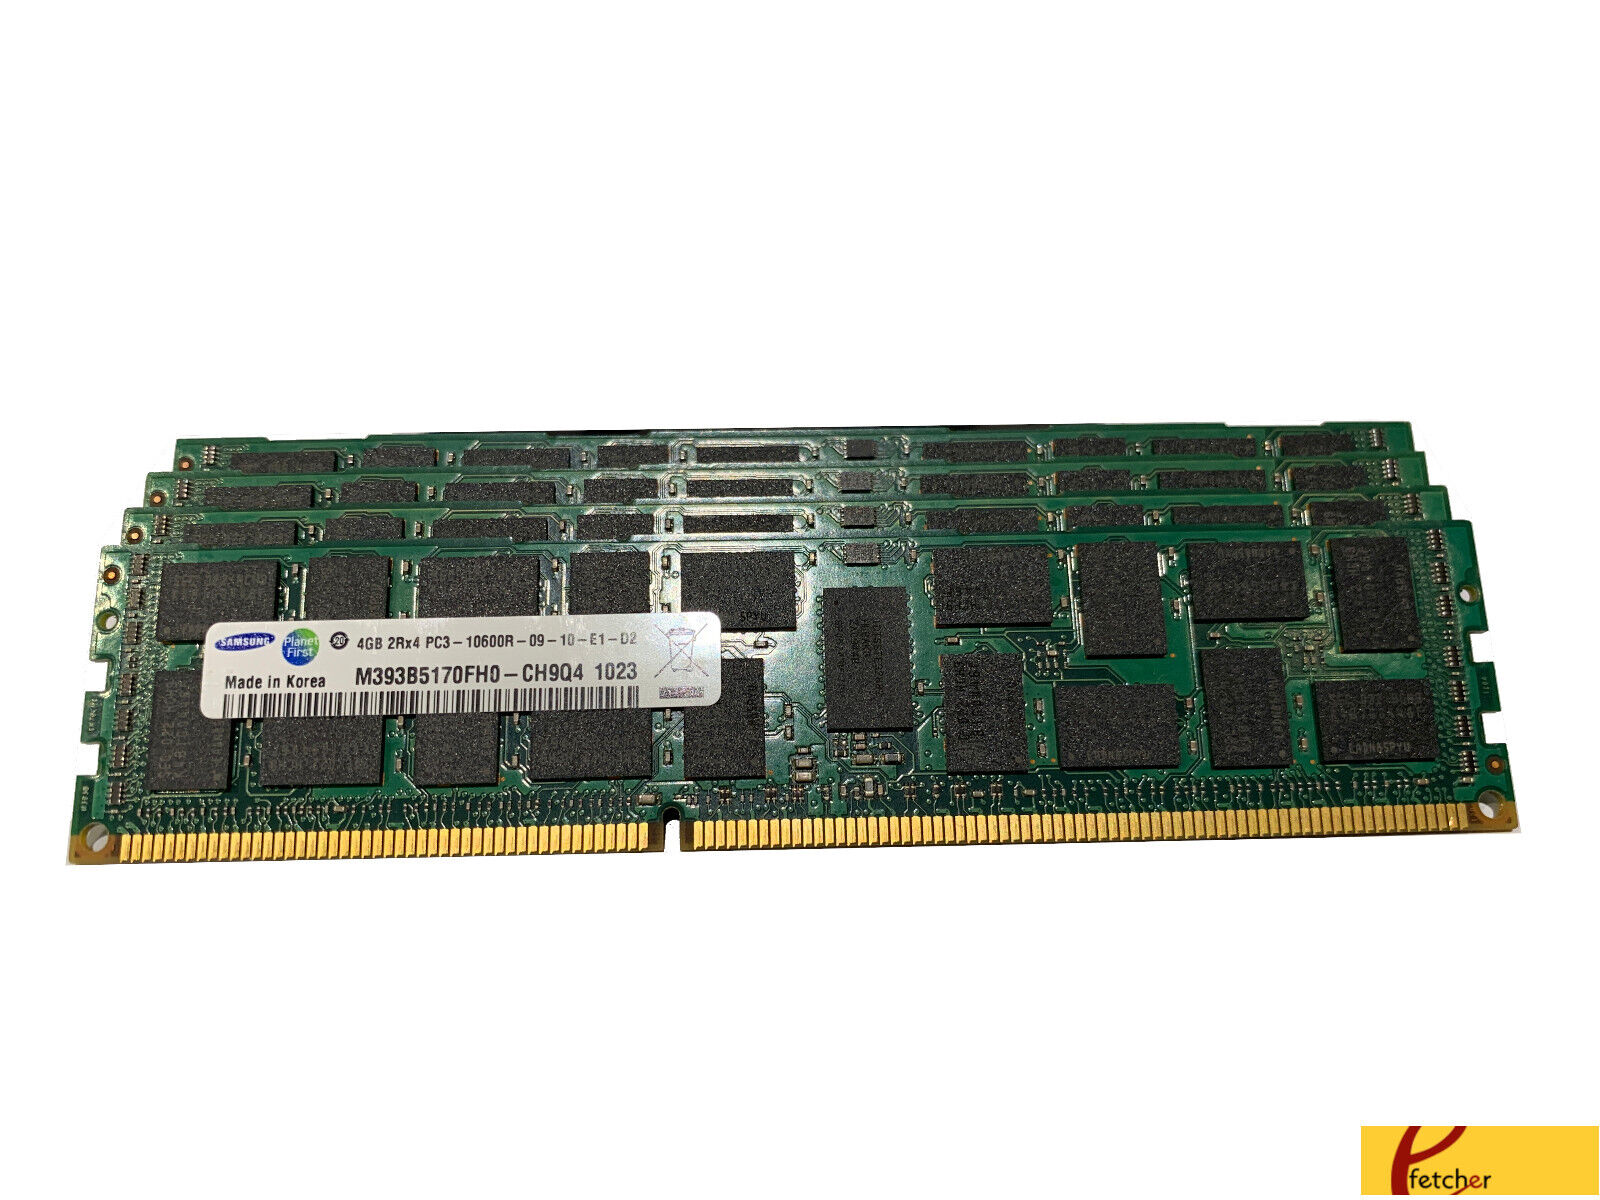 24GB (6 x 4GB) PC3-10600R DDR3 1333 ECC Reg Memory RAM SuperMicro X8DTi-F